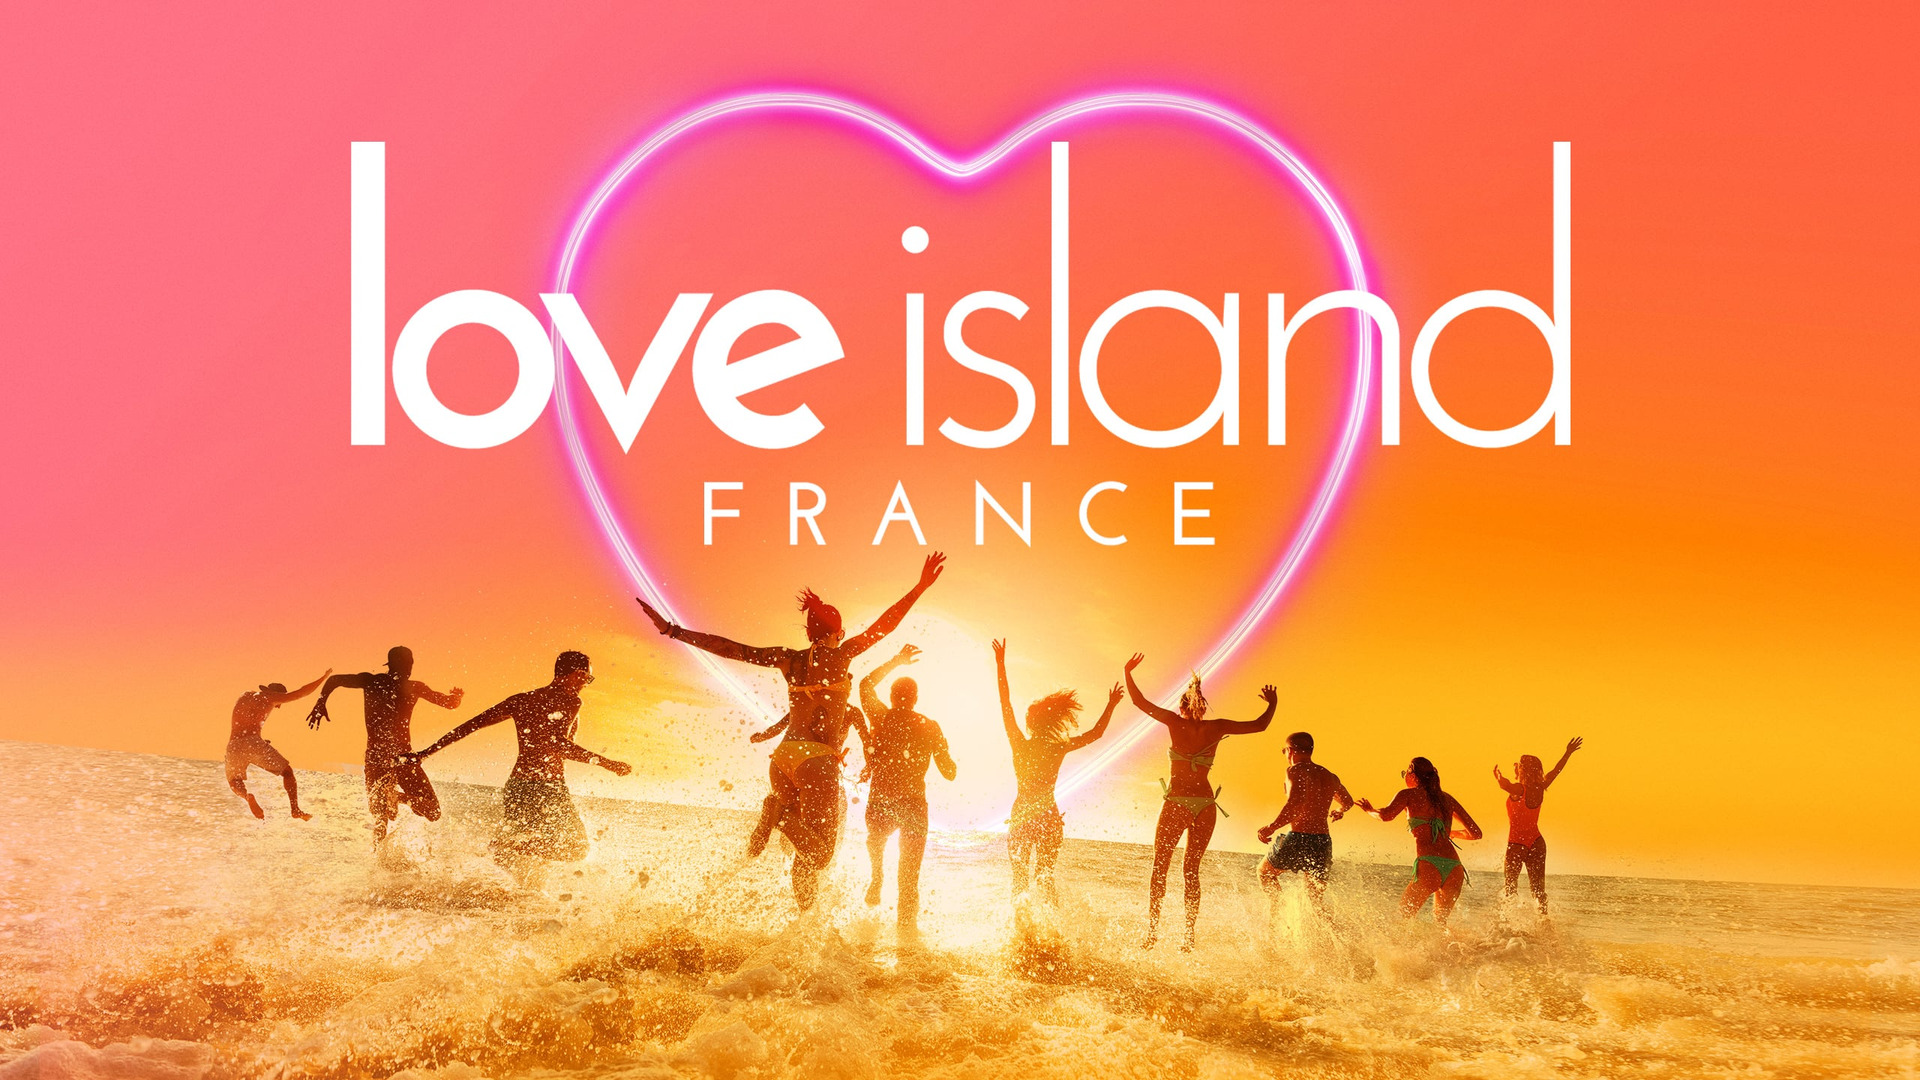 Show Love Island France